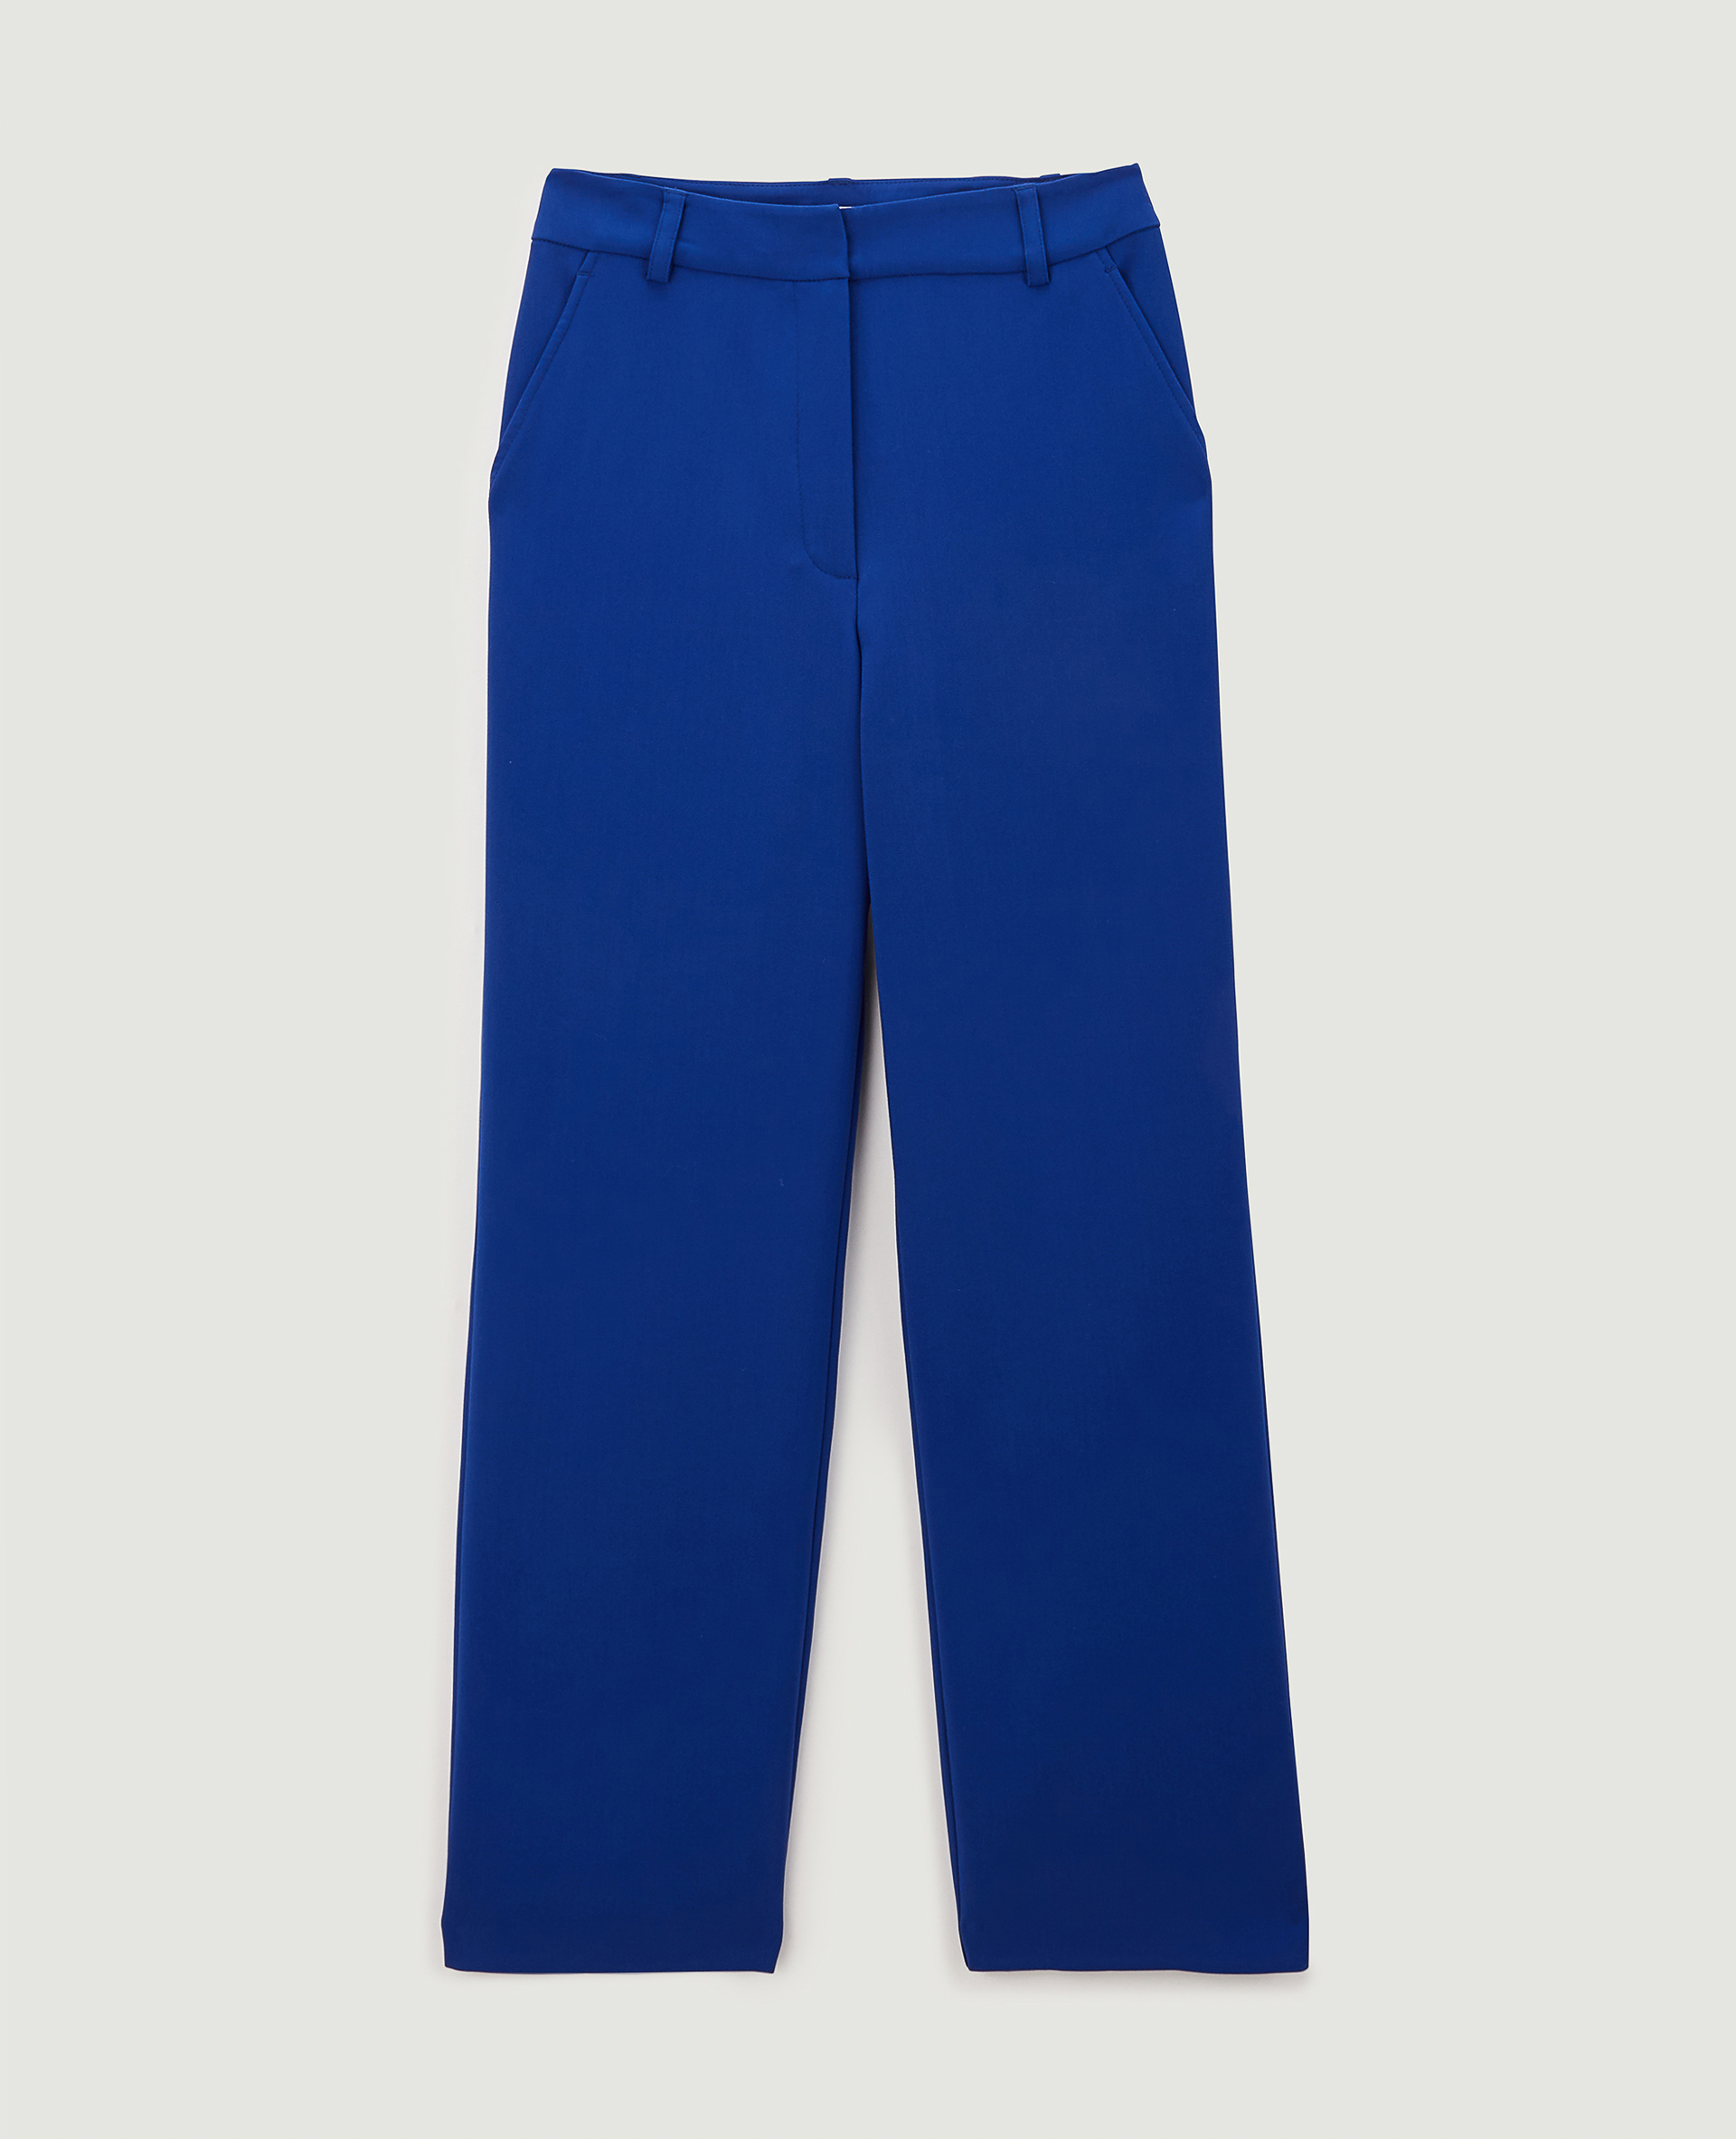 Pantalon droit taille haute bleu - Pimkie